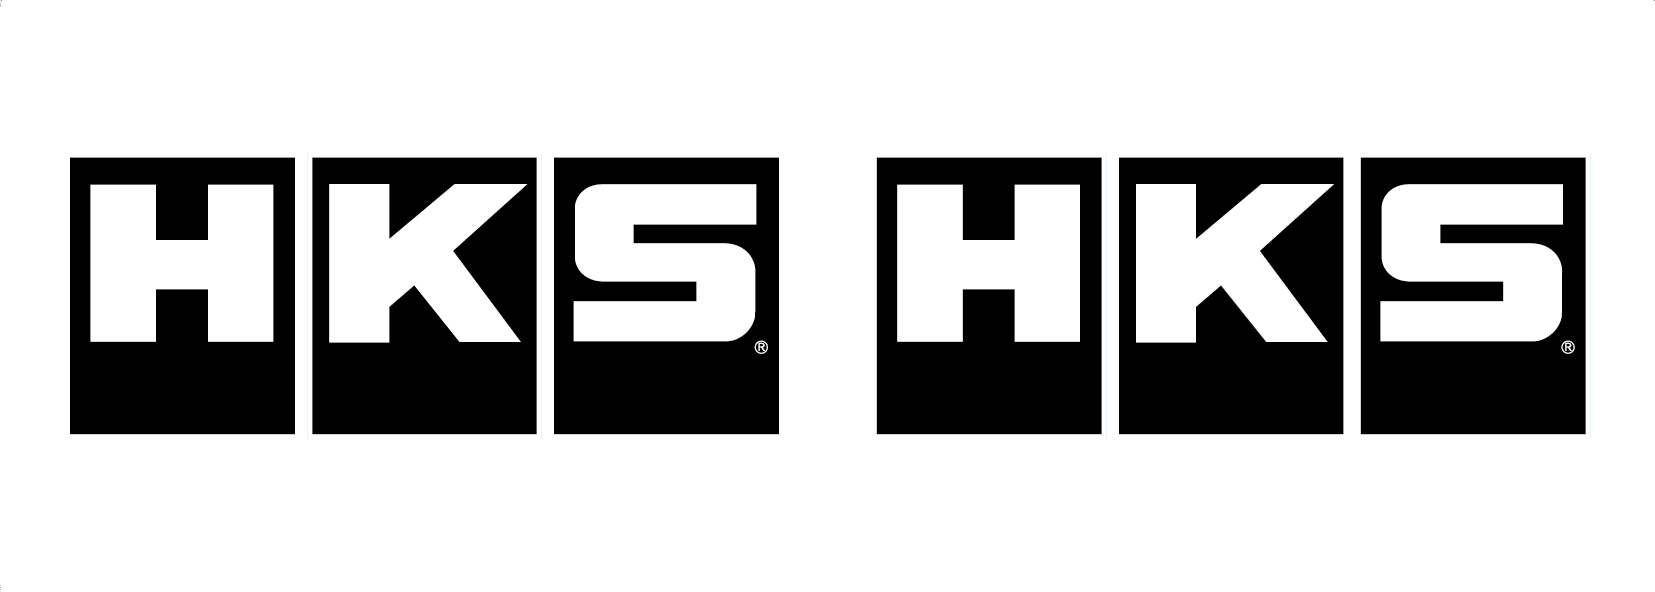 HKS Sticker, Small Logo